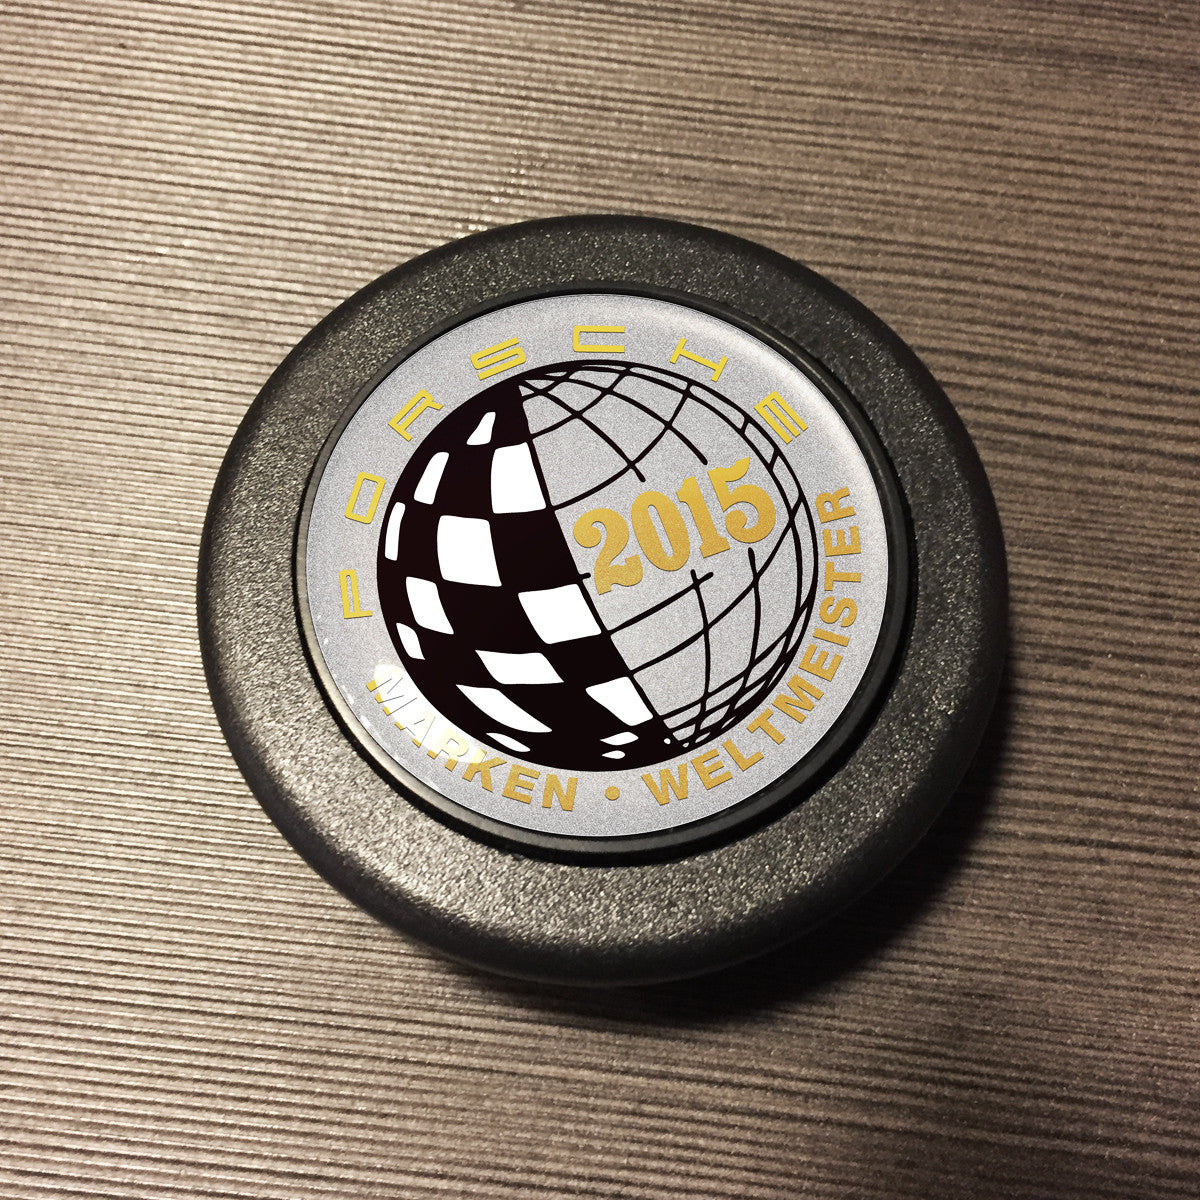 New) 911/912/930 Marken Weltmeister 2015 Horn Button - 1965- - AASE Sales